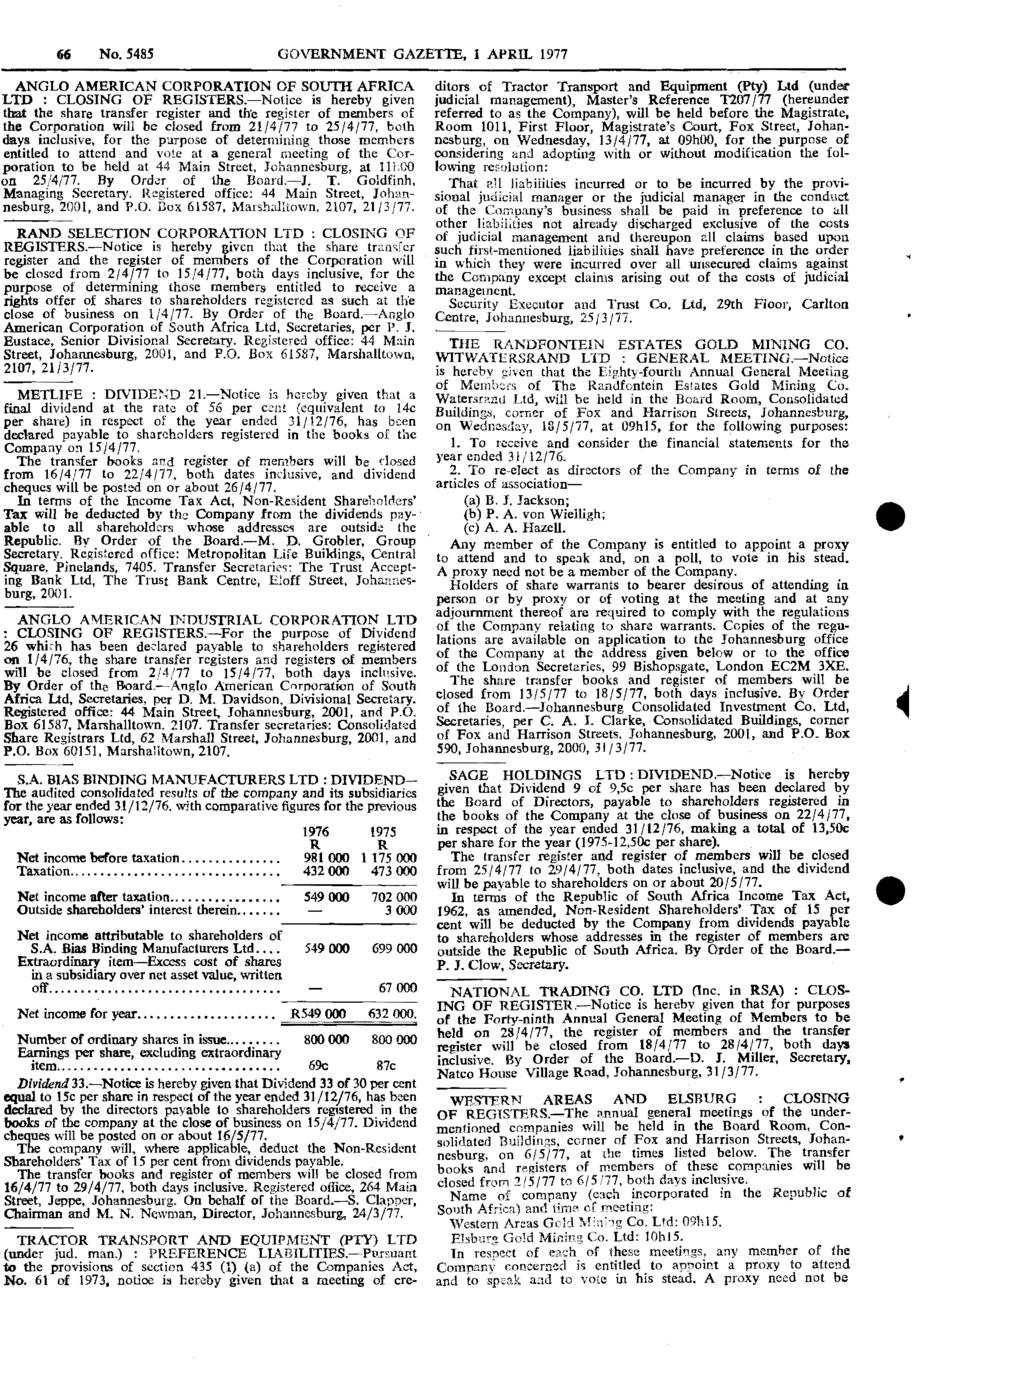 No. 5485 GOVERNMENT GAZETTE, 1 APRIL 1977 ANGLO AMERICAN CORPORATION OF soum AFRICA LTD : CLOSING OF REGISTERS.